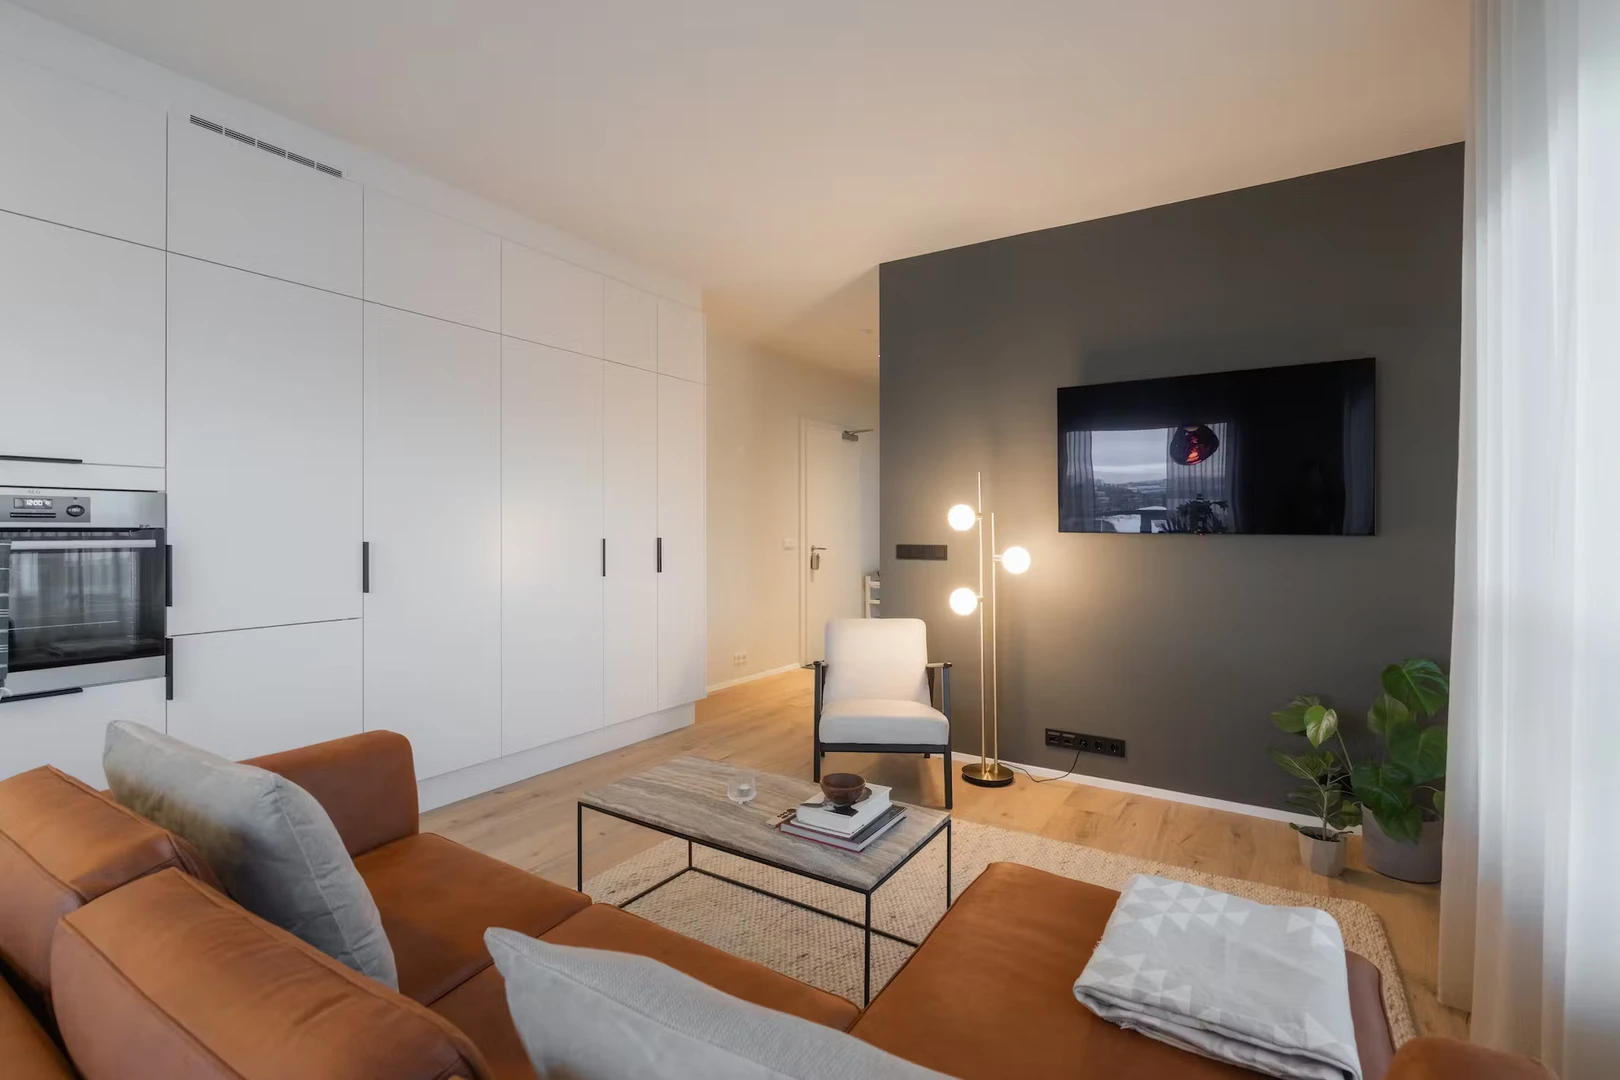 Entire fully furnished flat in Reykjavík